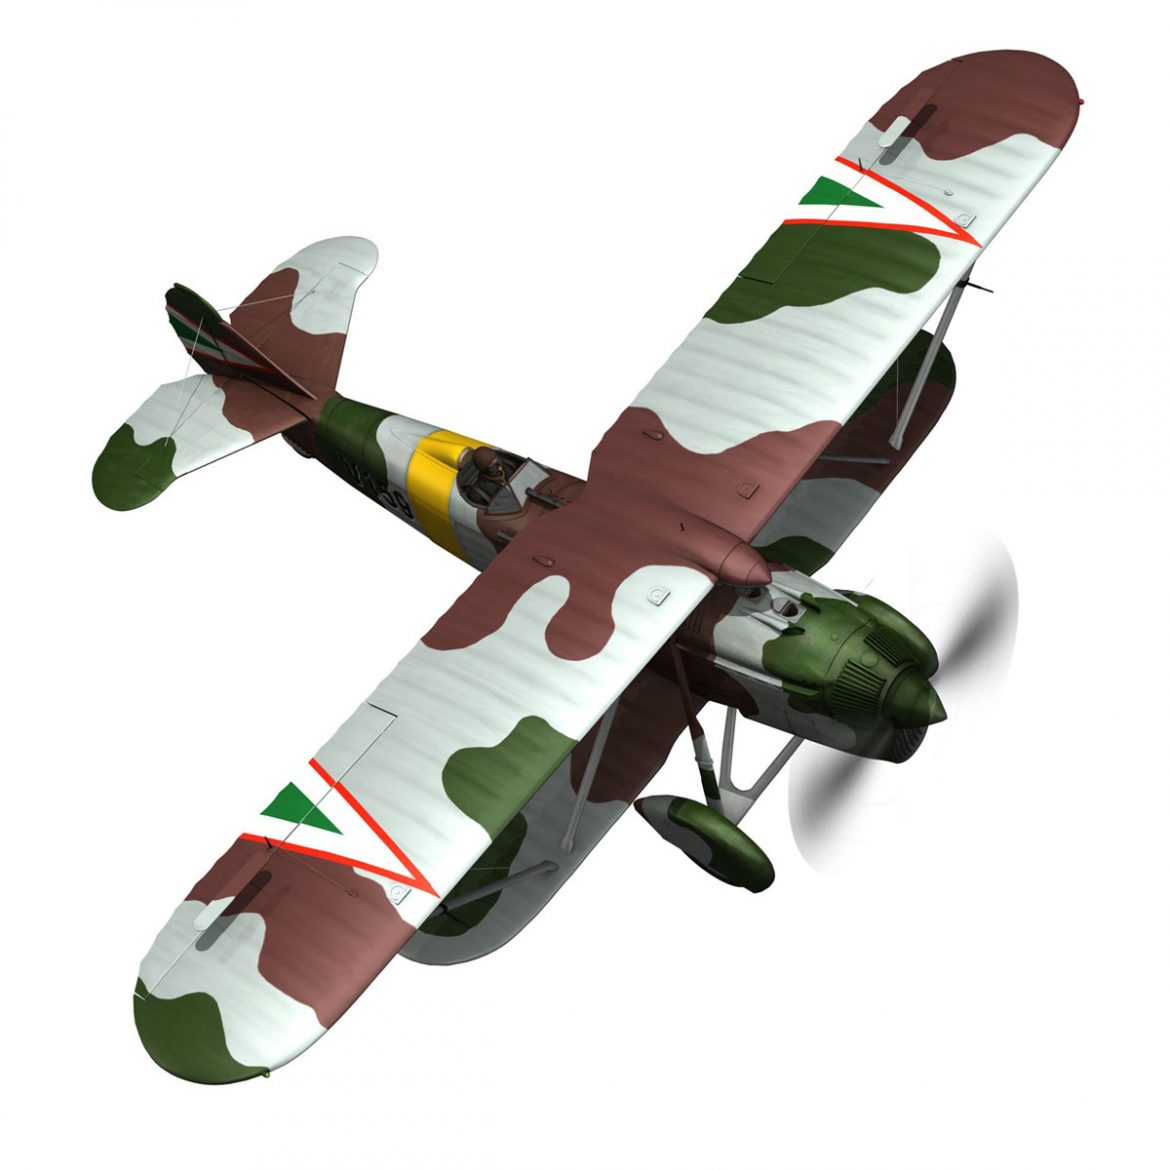 fiat cr.32 – hungarian royal air force – v159 3d model fbx c4d lwo obj 299962